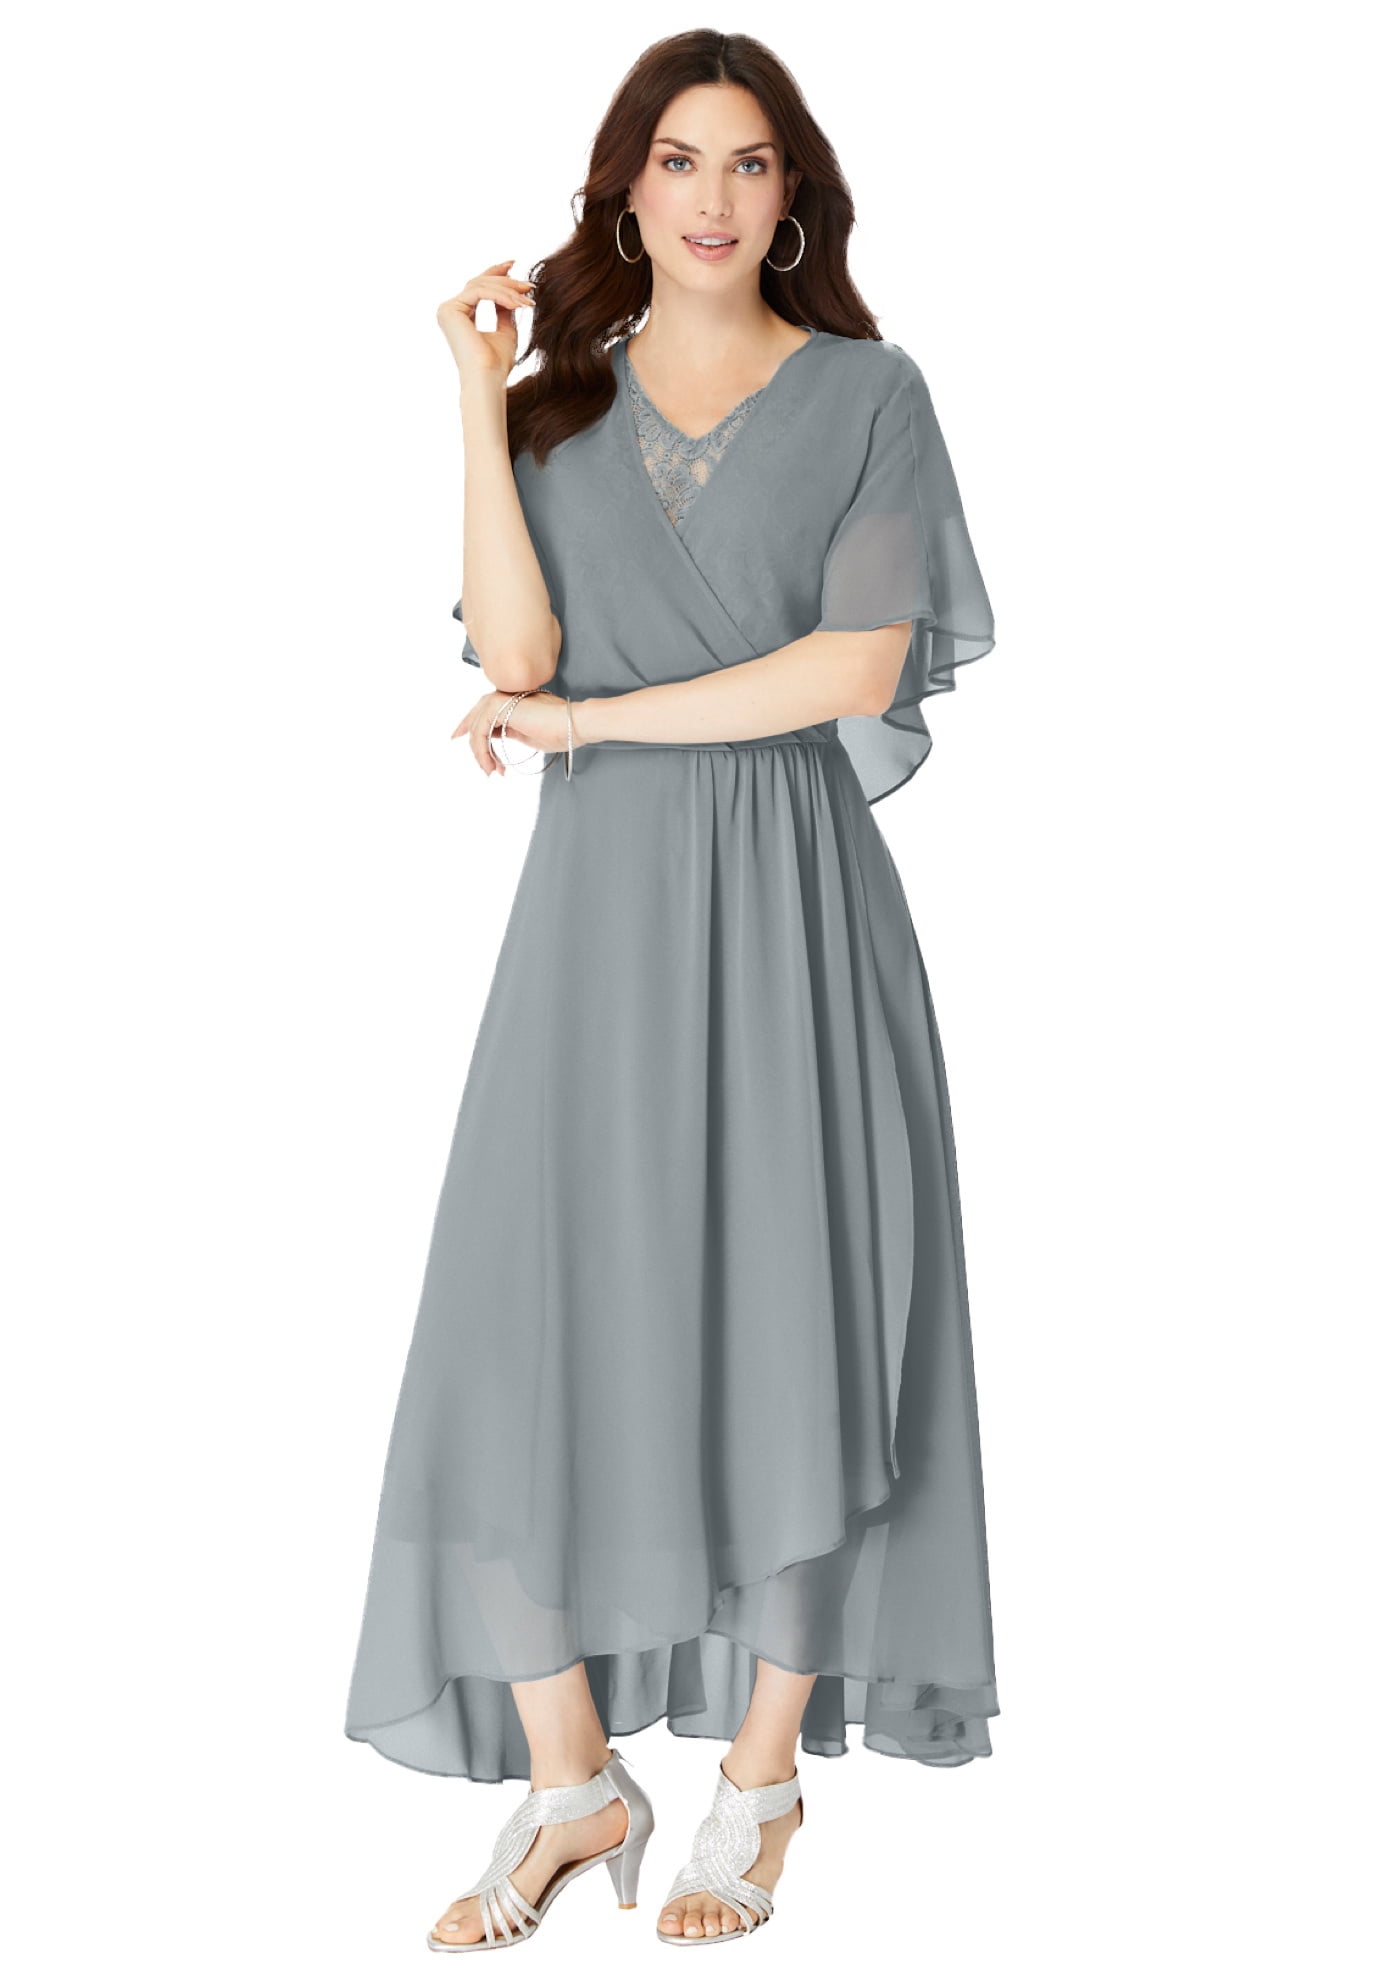 Roaman's Women's Plus Size Chiffon Faux Wrap Dress - Walmart.com